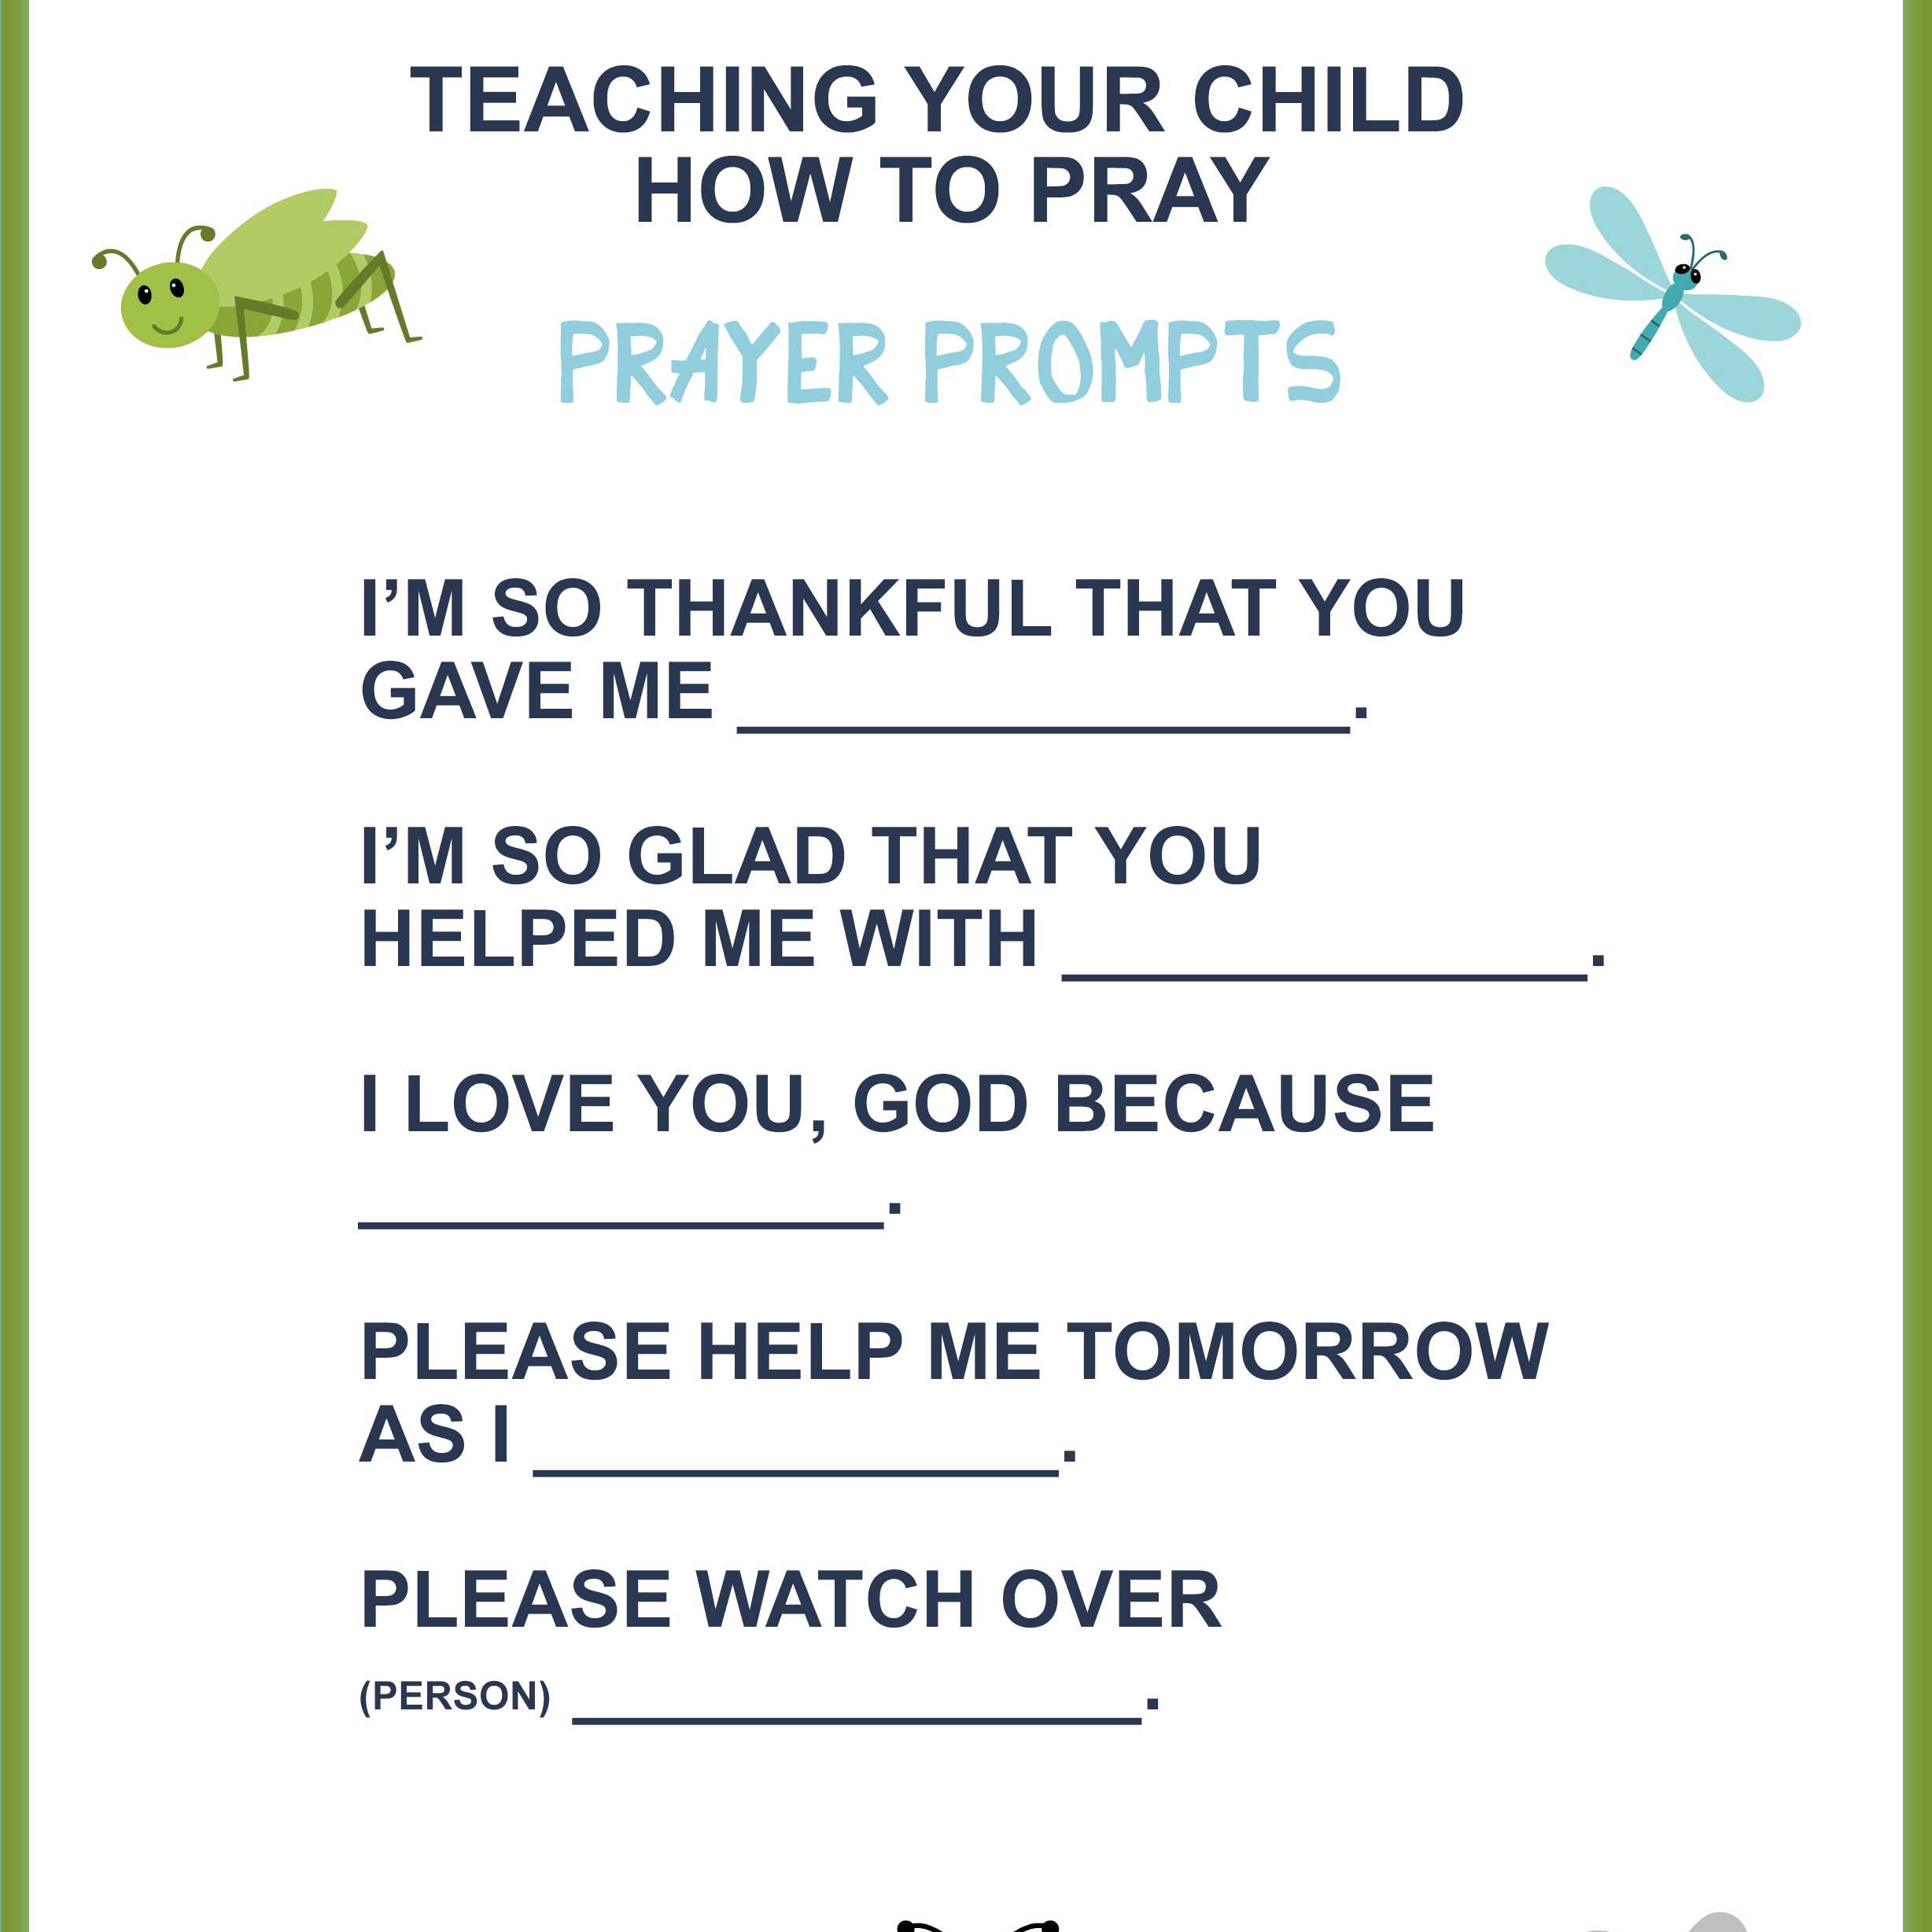 Teaching Your Child How to Pray - 2456 x 2456 jpeg 1049kB